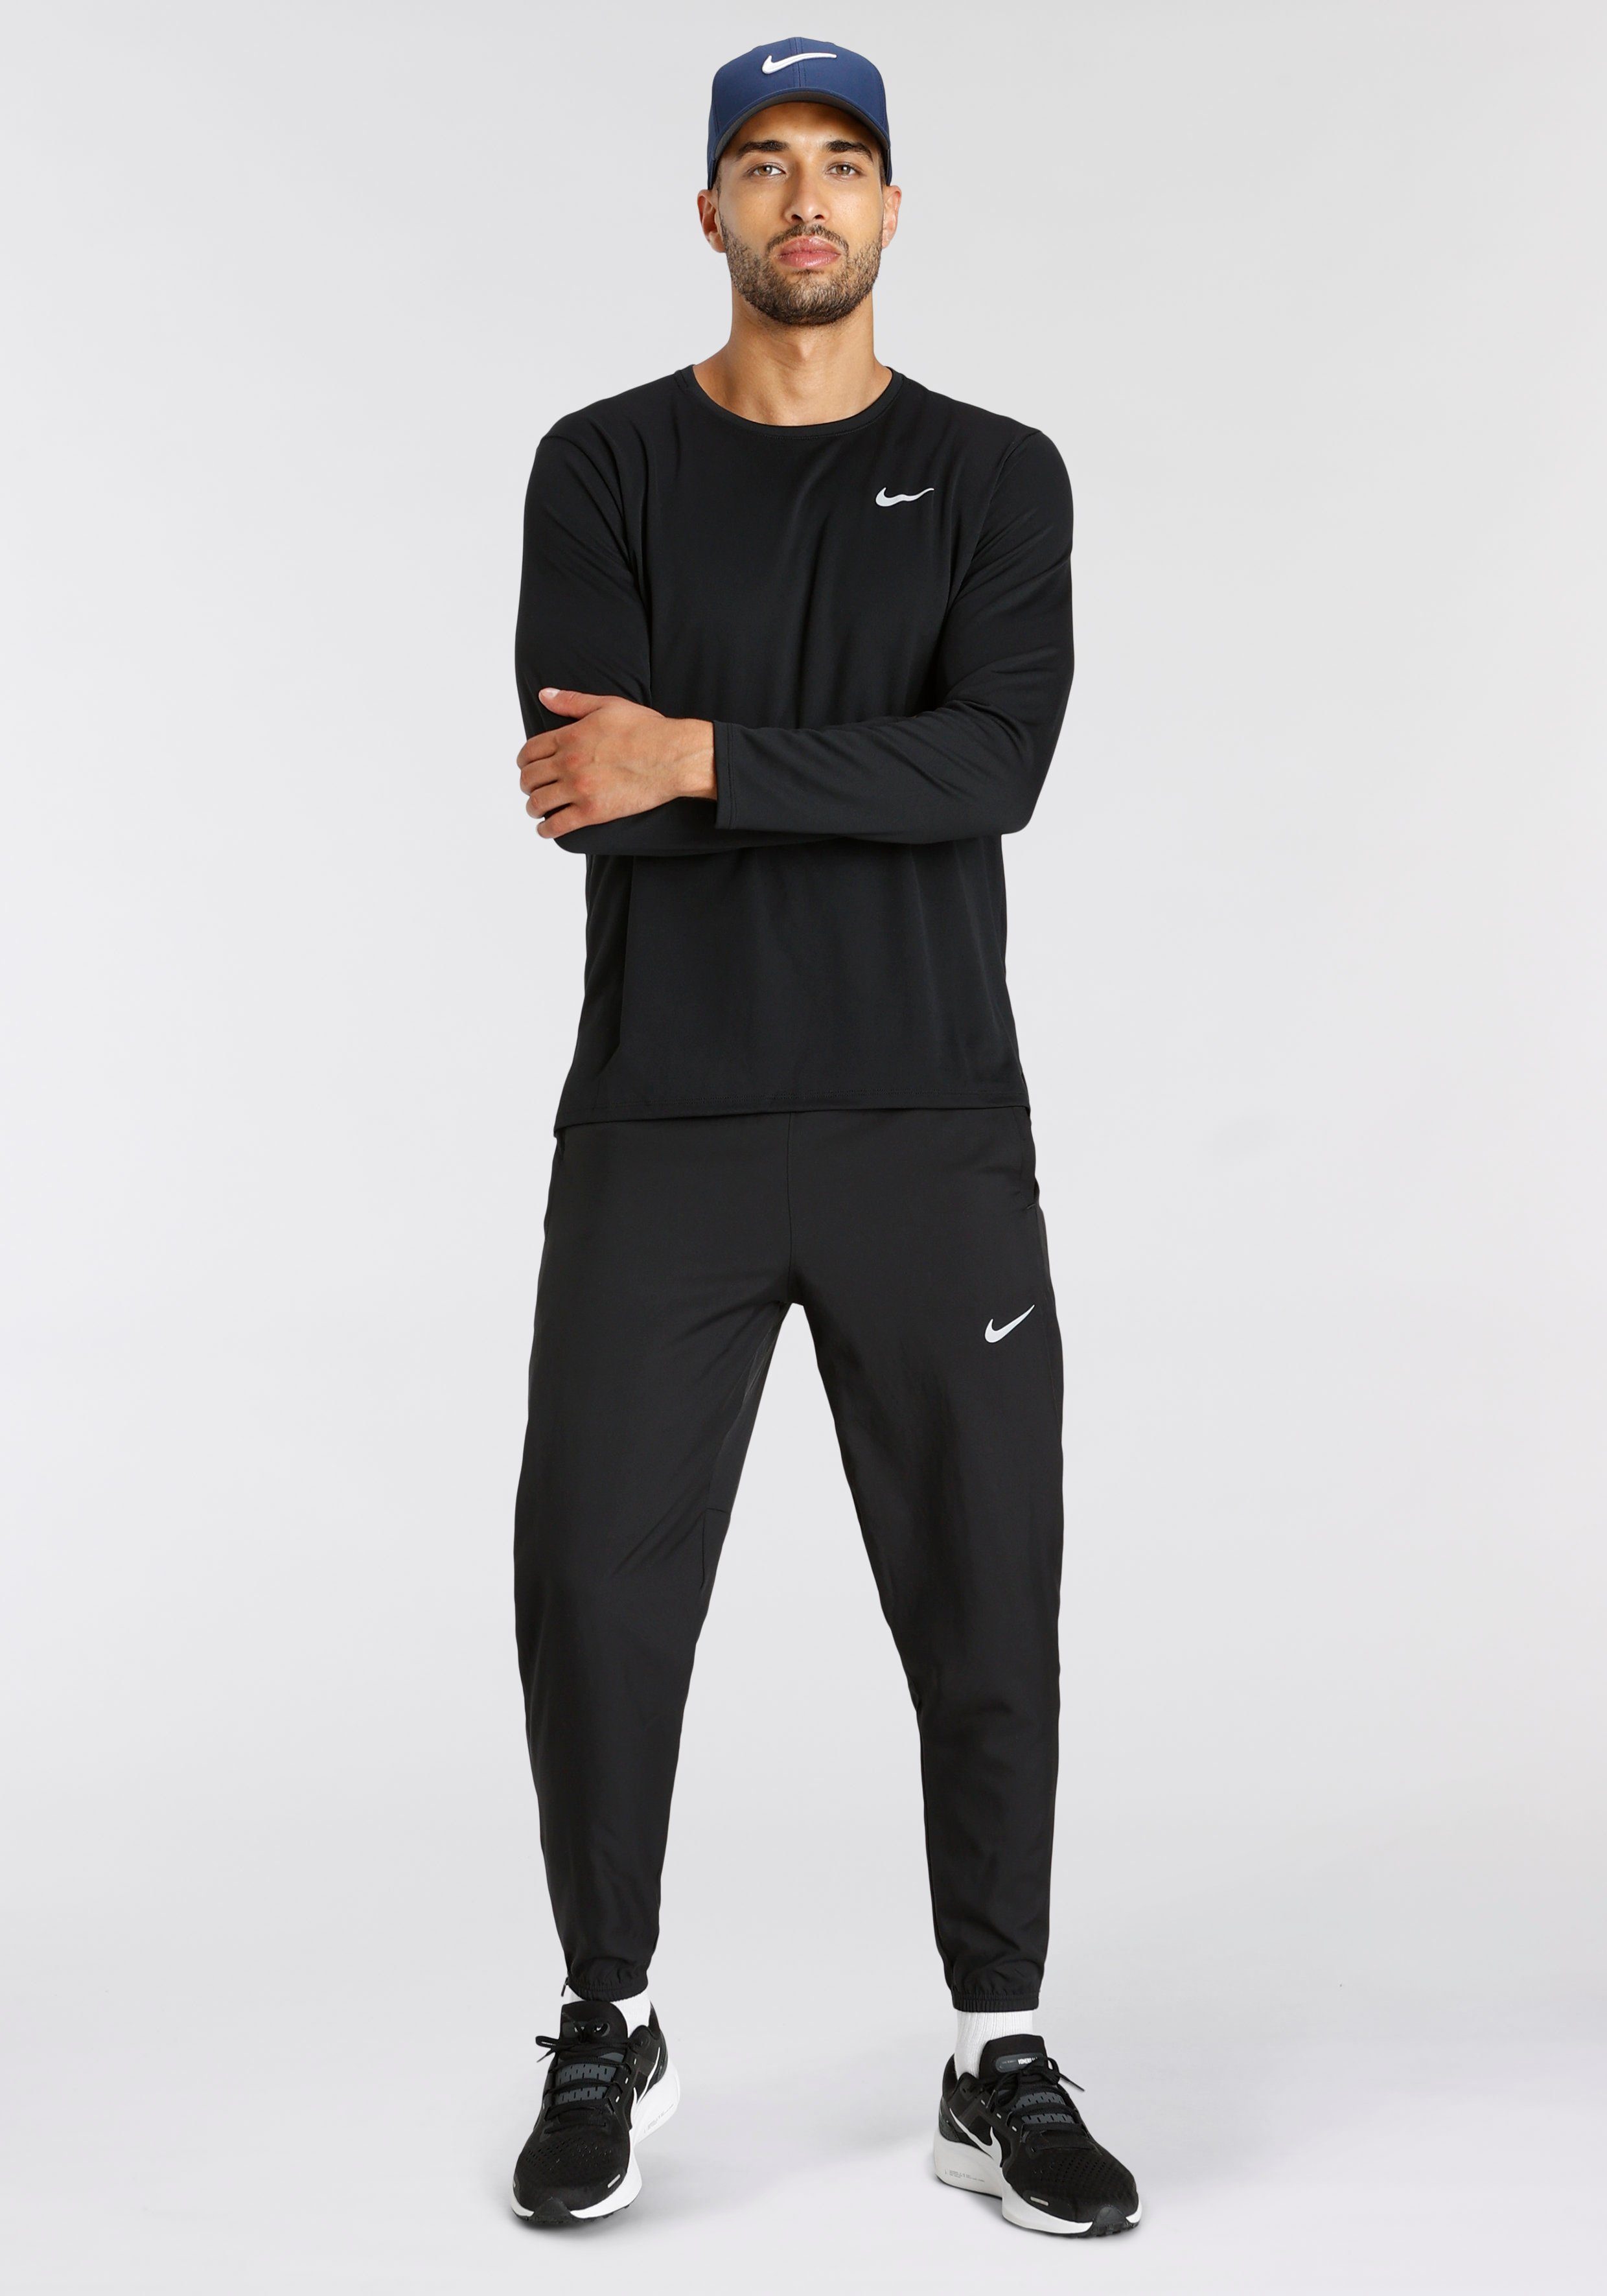 Sportliche Nike Mode kaufen » Nike Sportbekleidung | OTTO